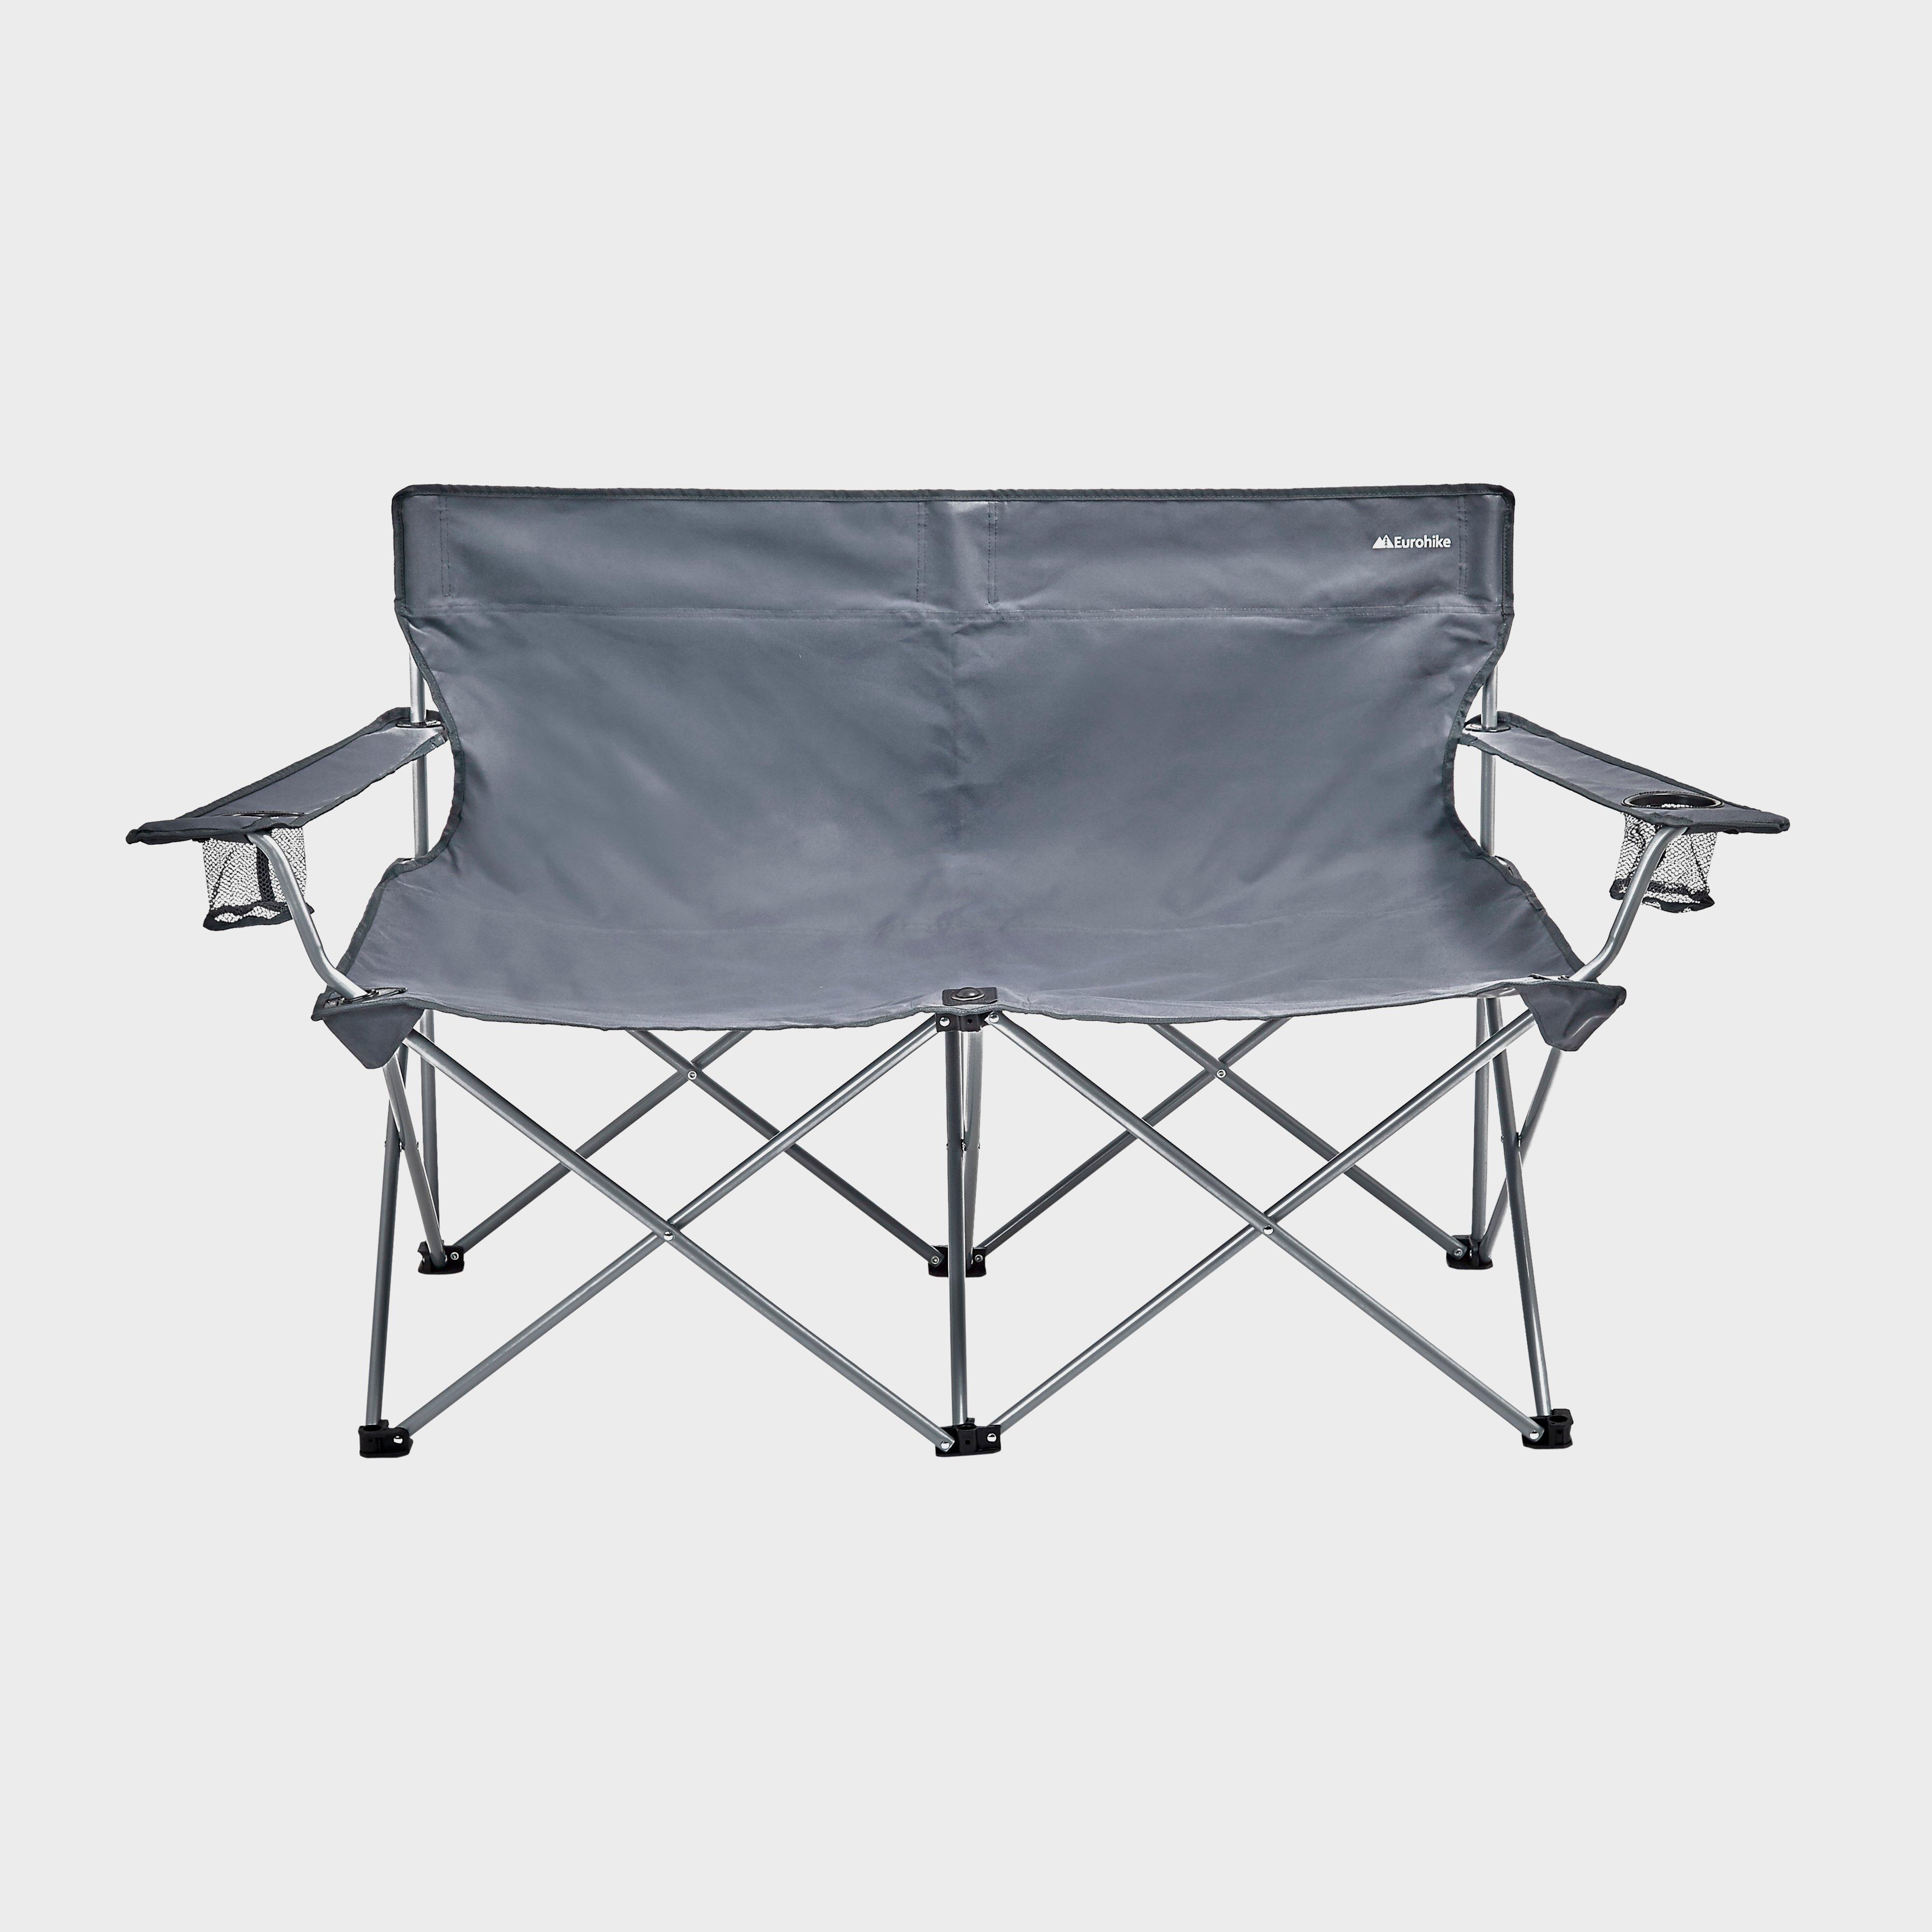 Eurohike Peak Double Chair - Grey/dry  Grey/dry